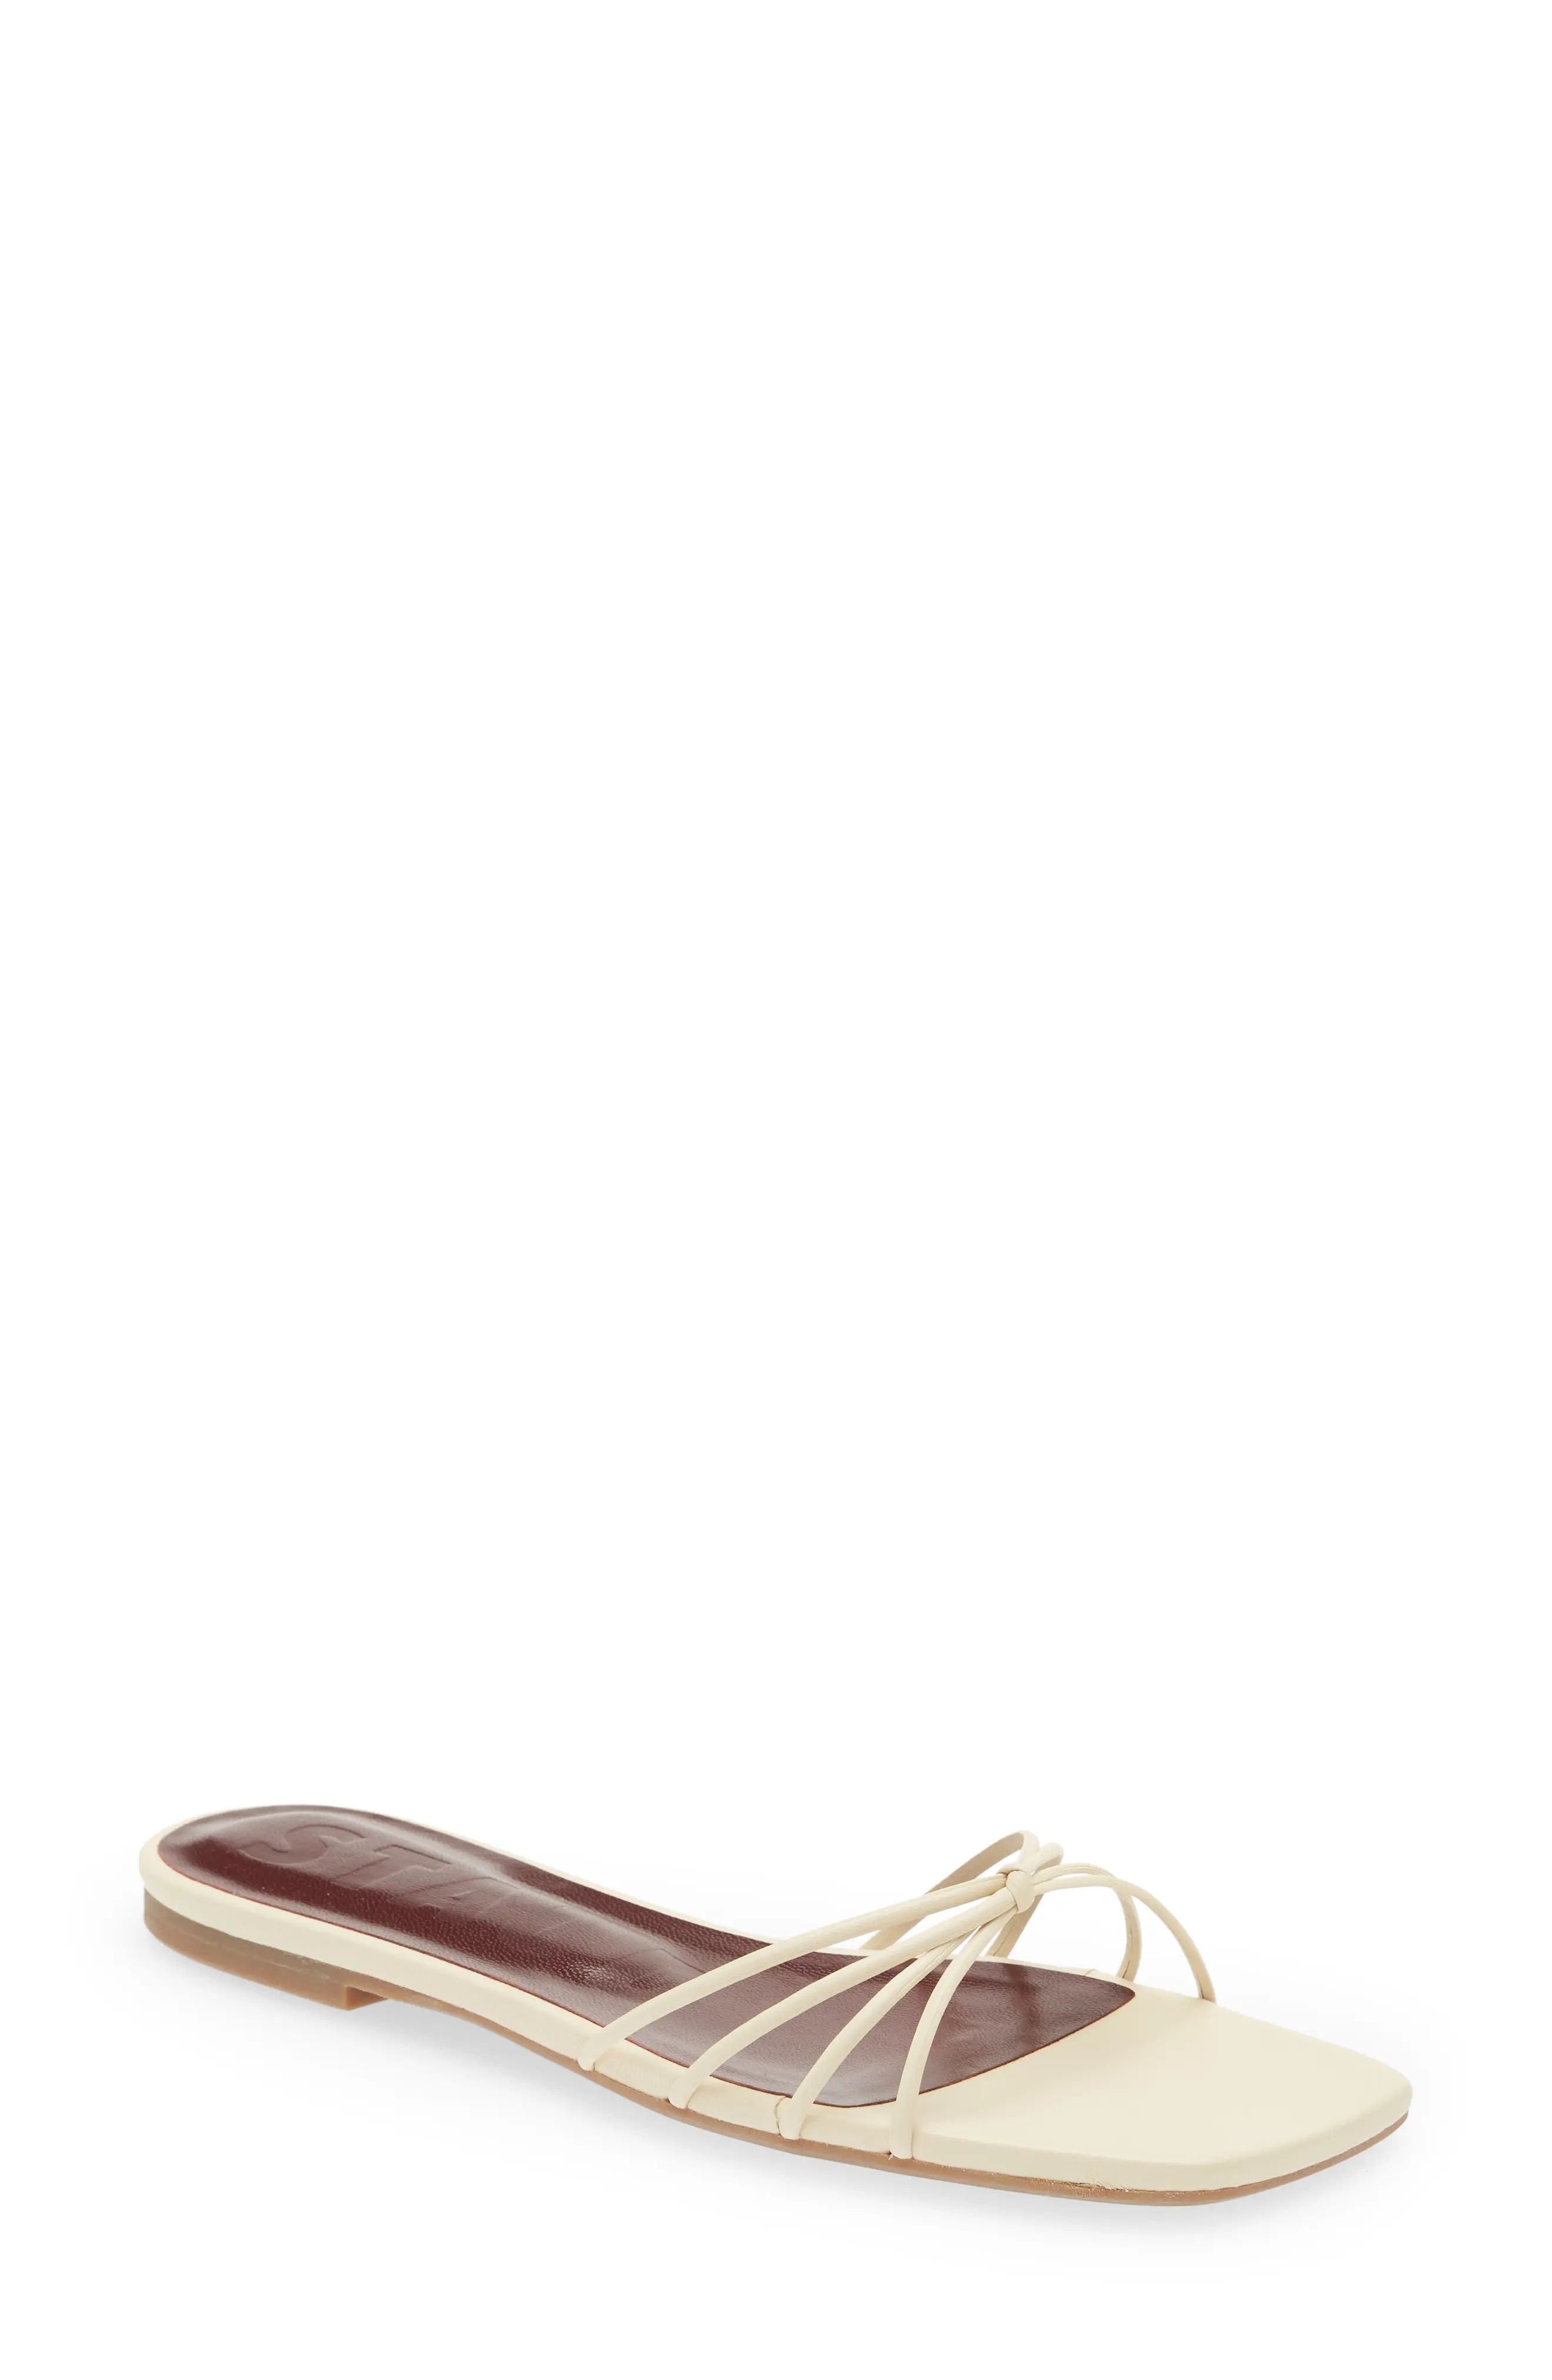 STAUD Pippa Slide Sandal in Cream at Nordstrom, Size 10Us | Nordstrom